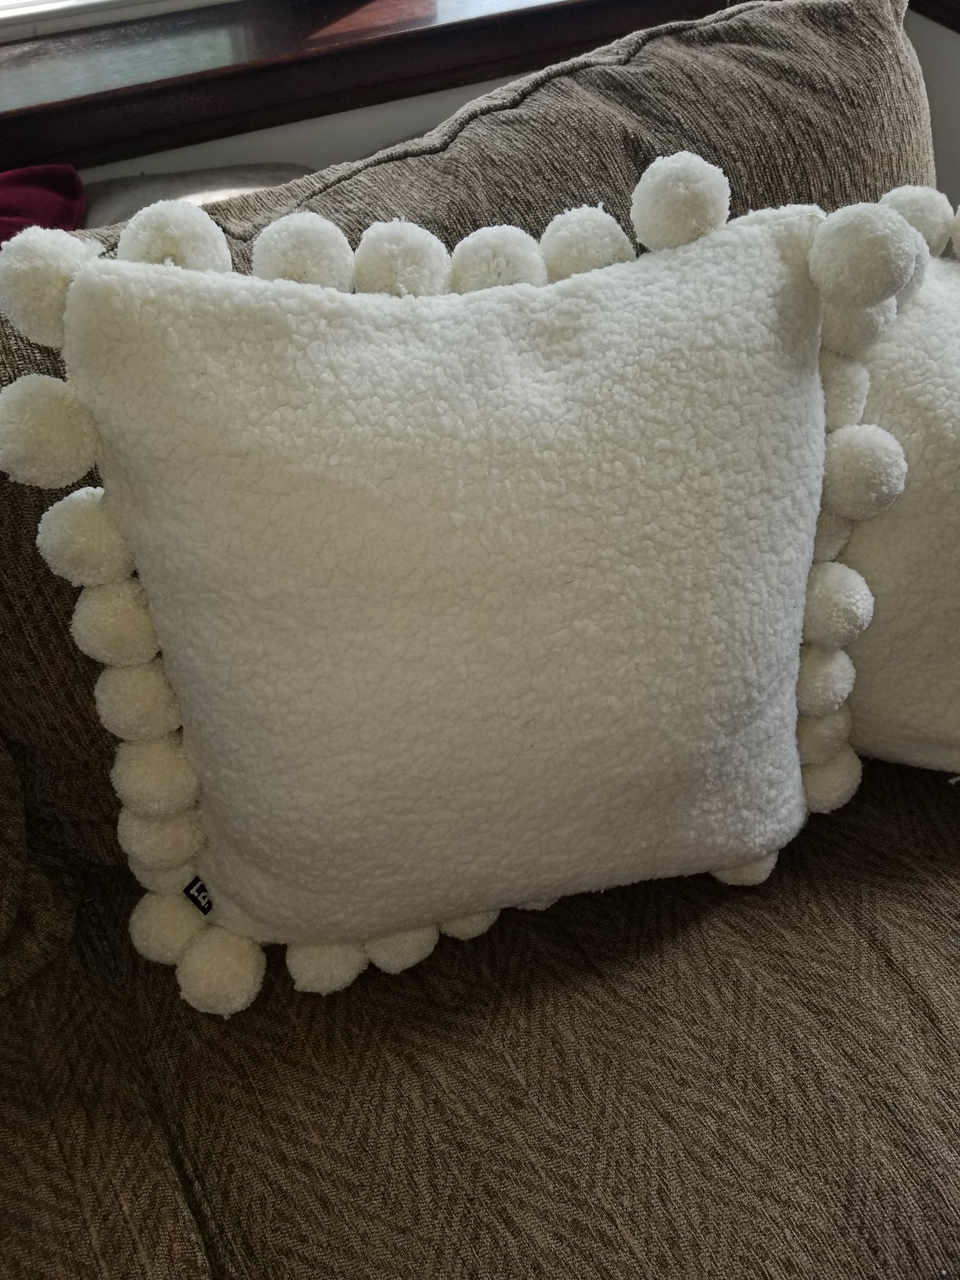 cream sherpa fleece jumbo pom pom pillow covers on a tan couch